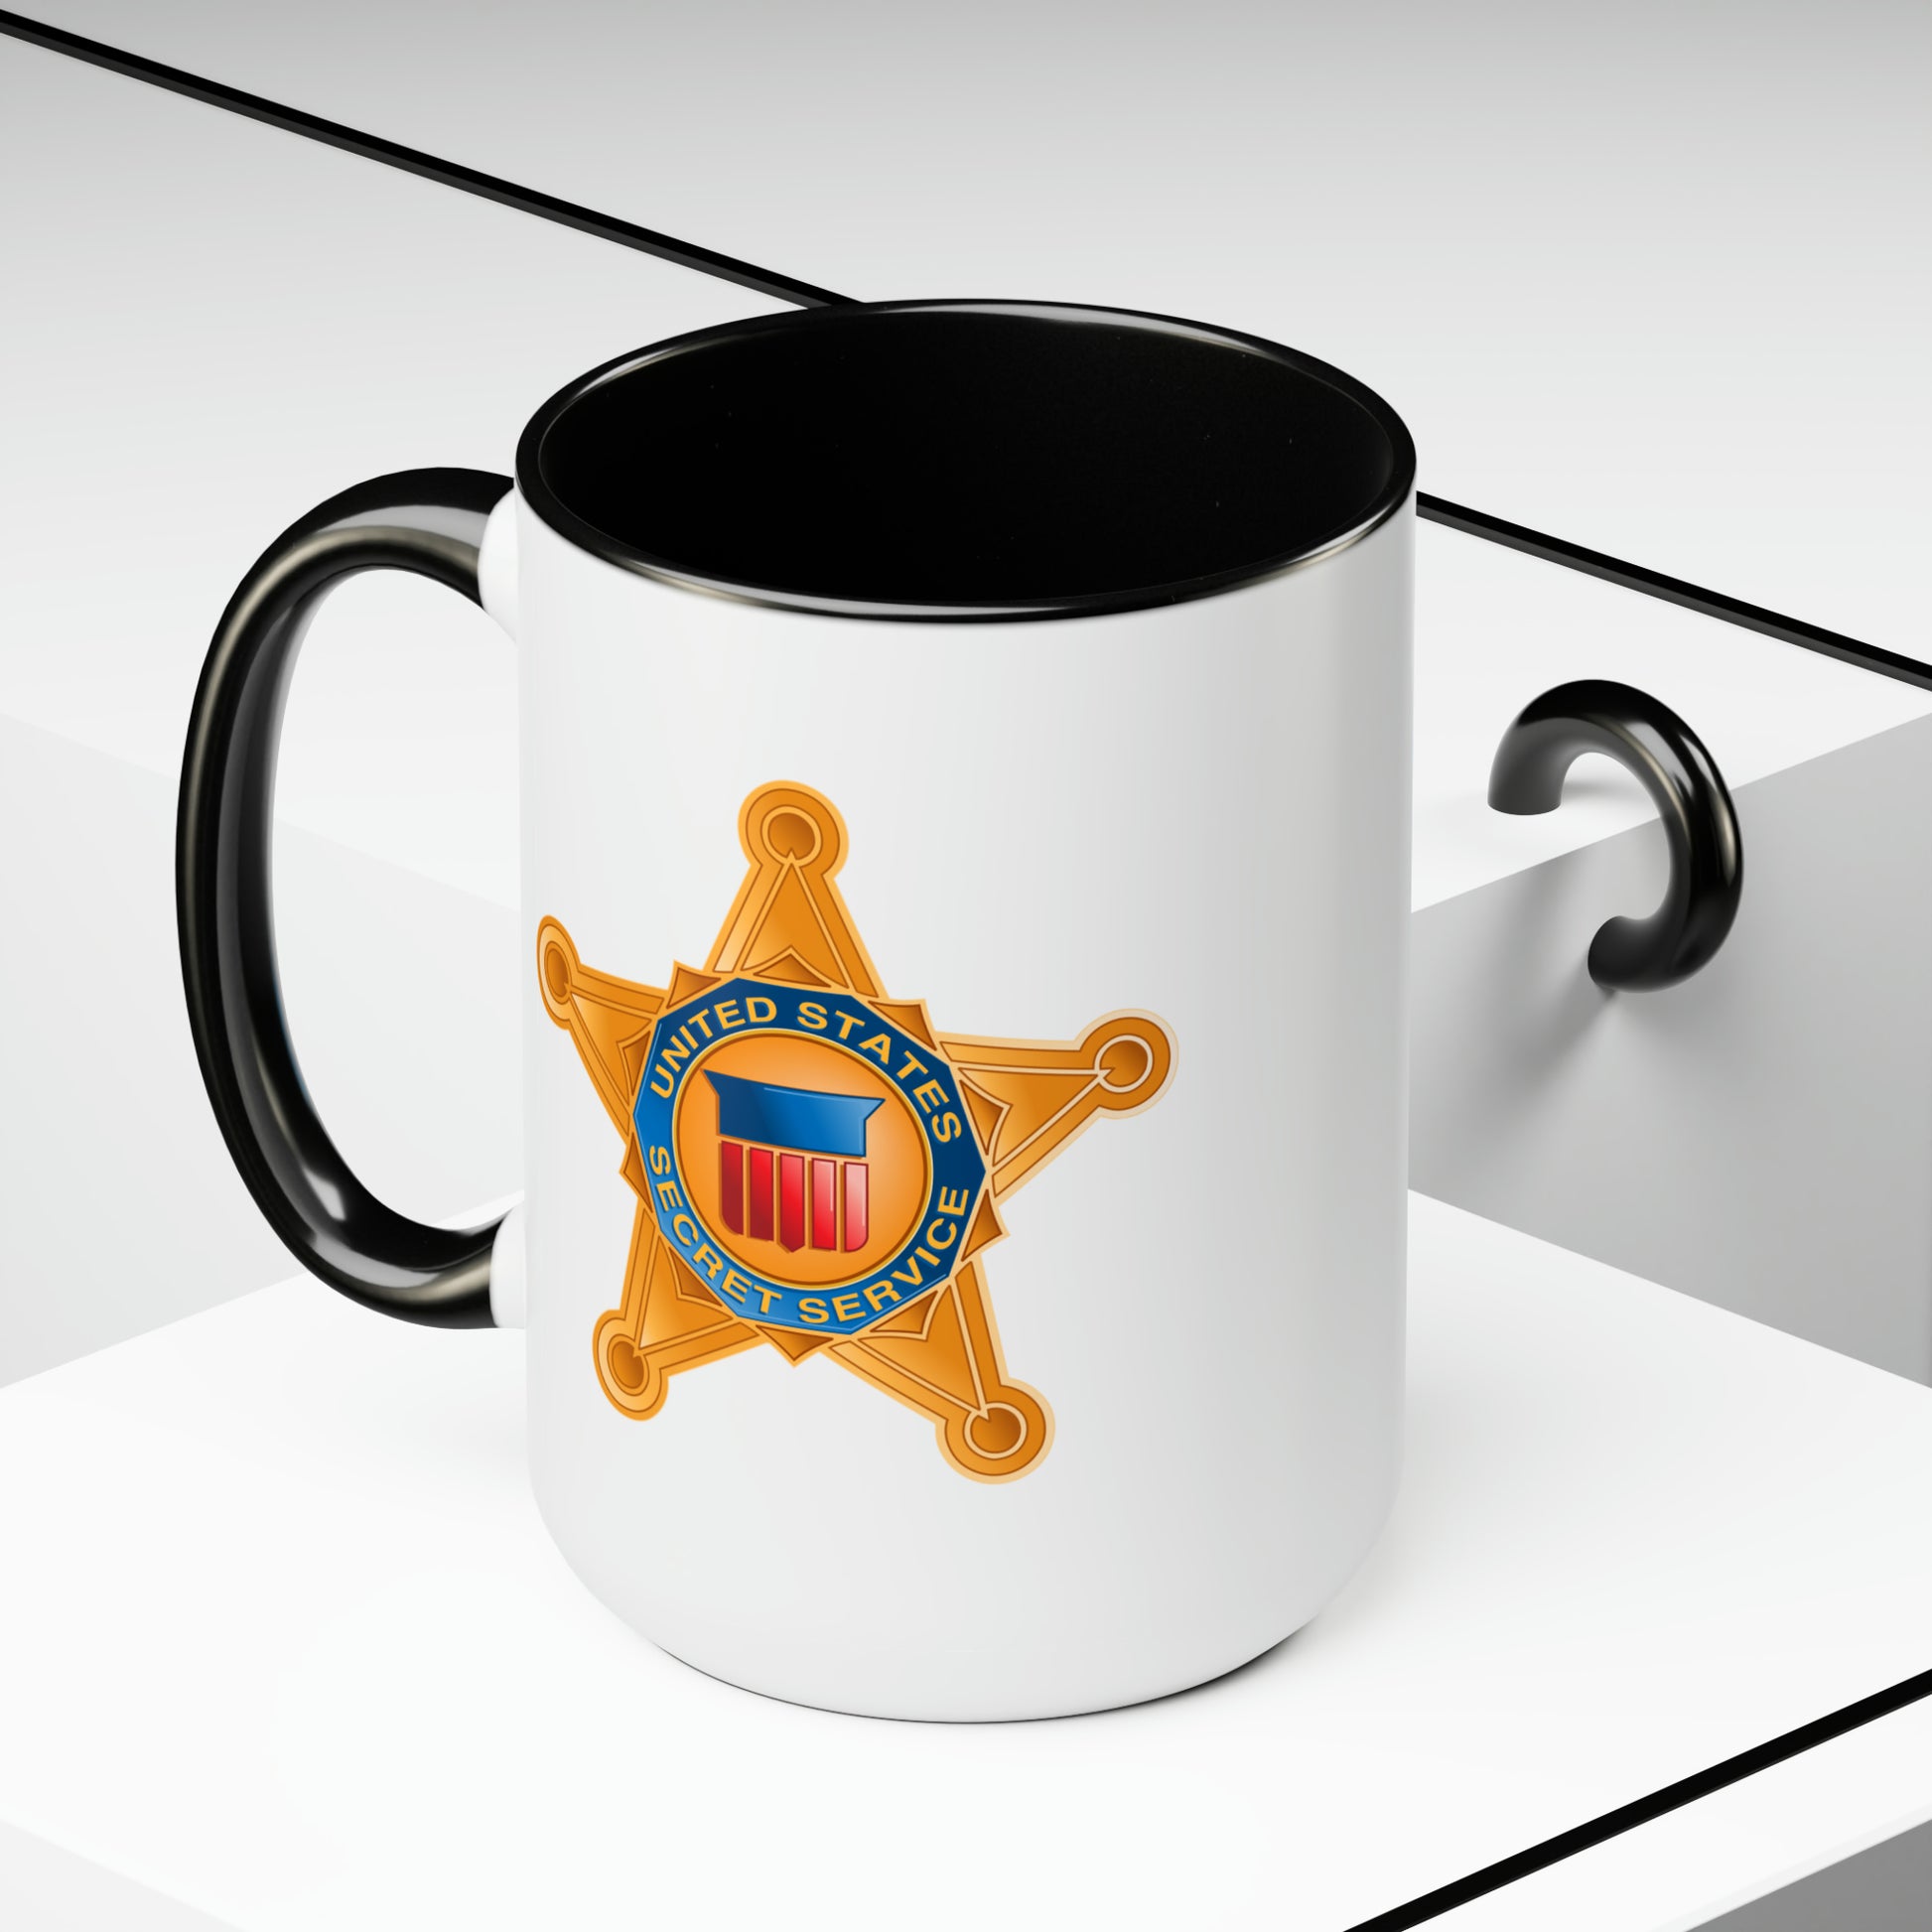 US Secret Service Coffee Mugs - Double Sided Black Accent White Ceramic 15oz by TheGlassyLass